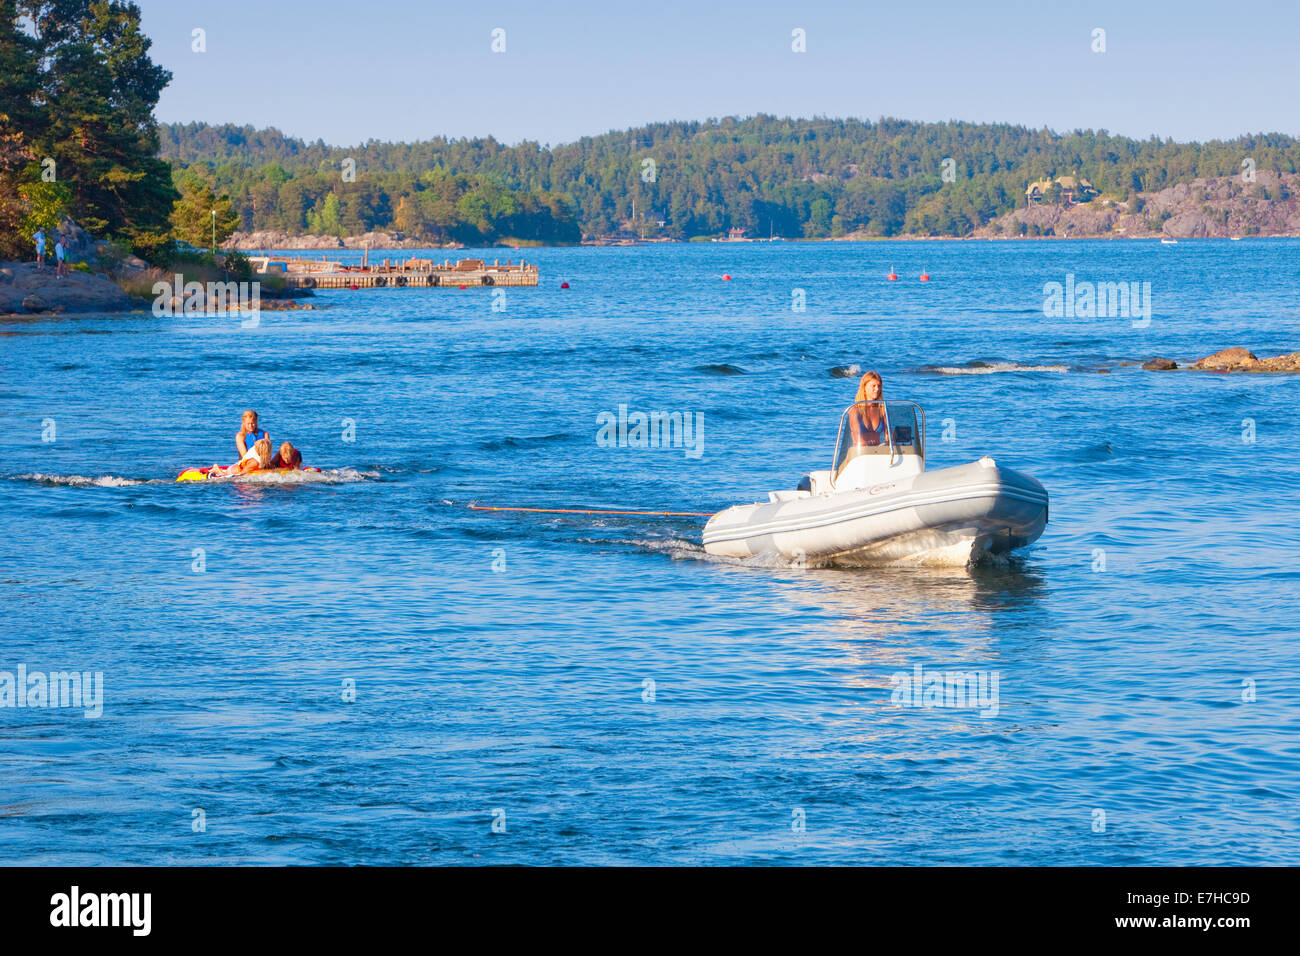 Sweden, Stockholm - Mother in motorboat pulling kids in rubberboat. Stock Photo